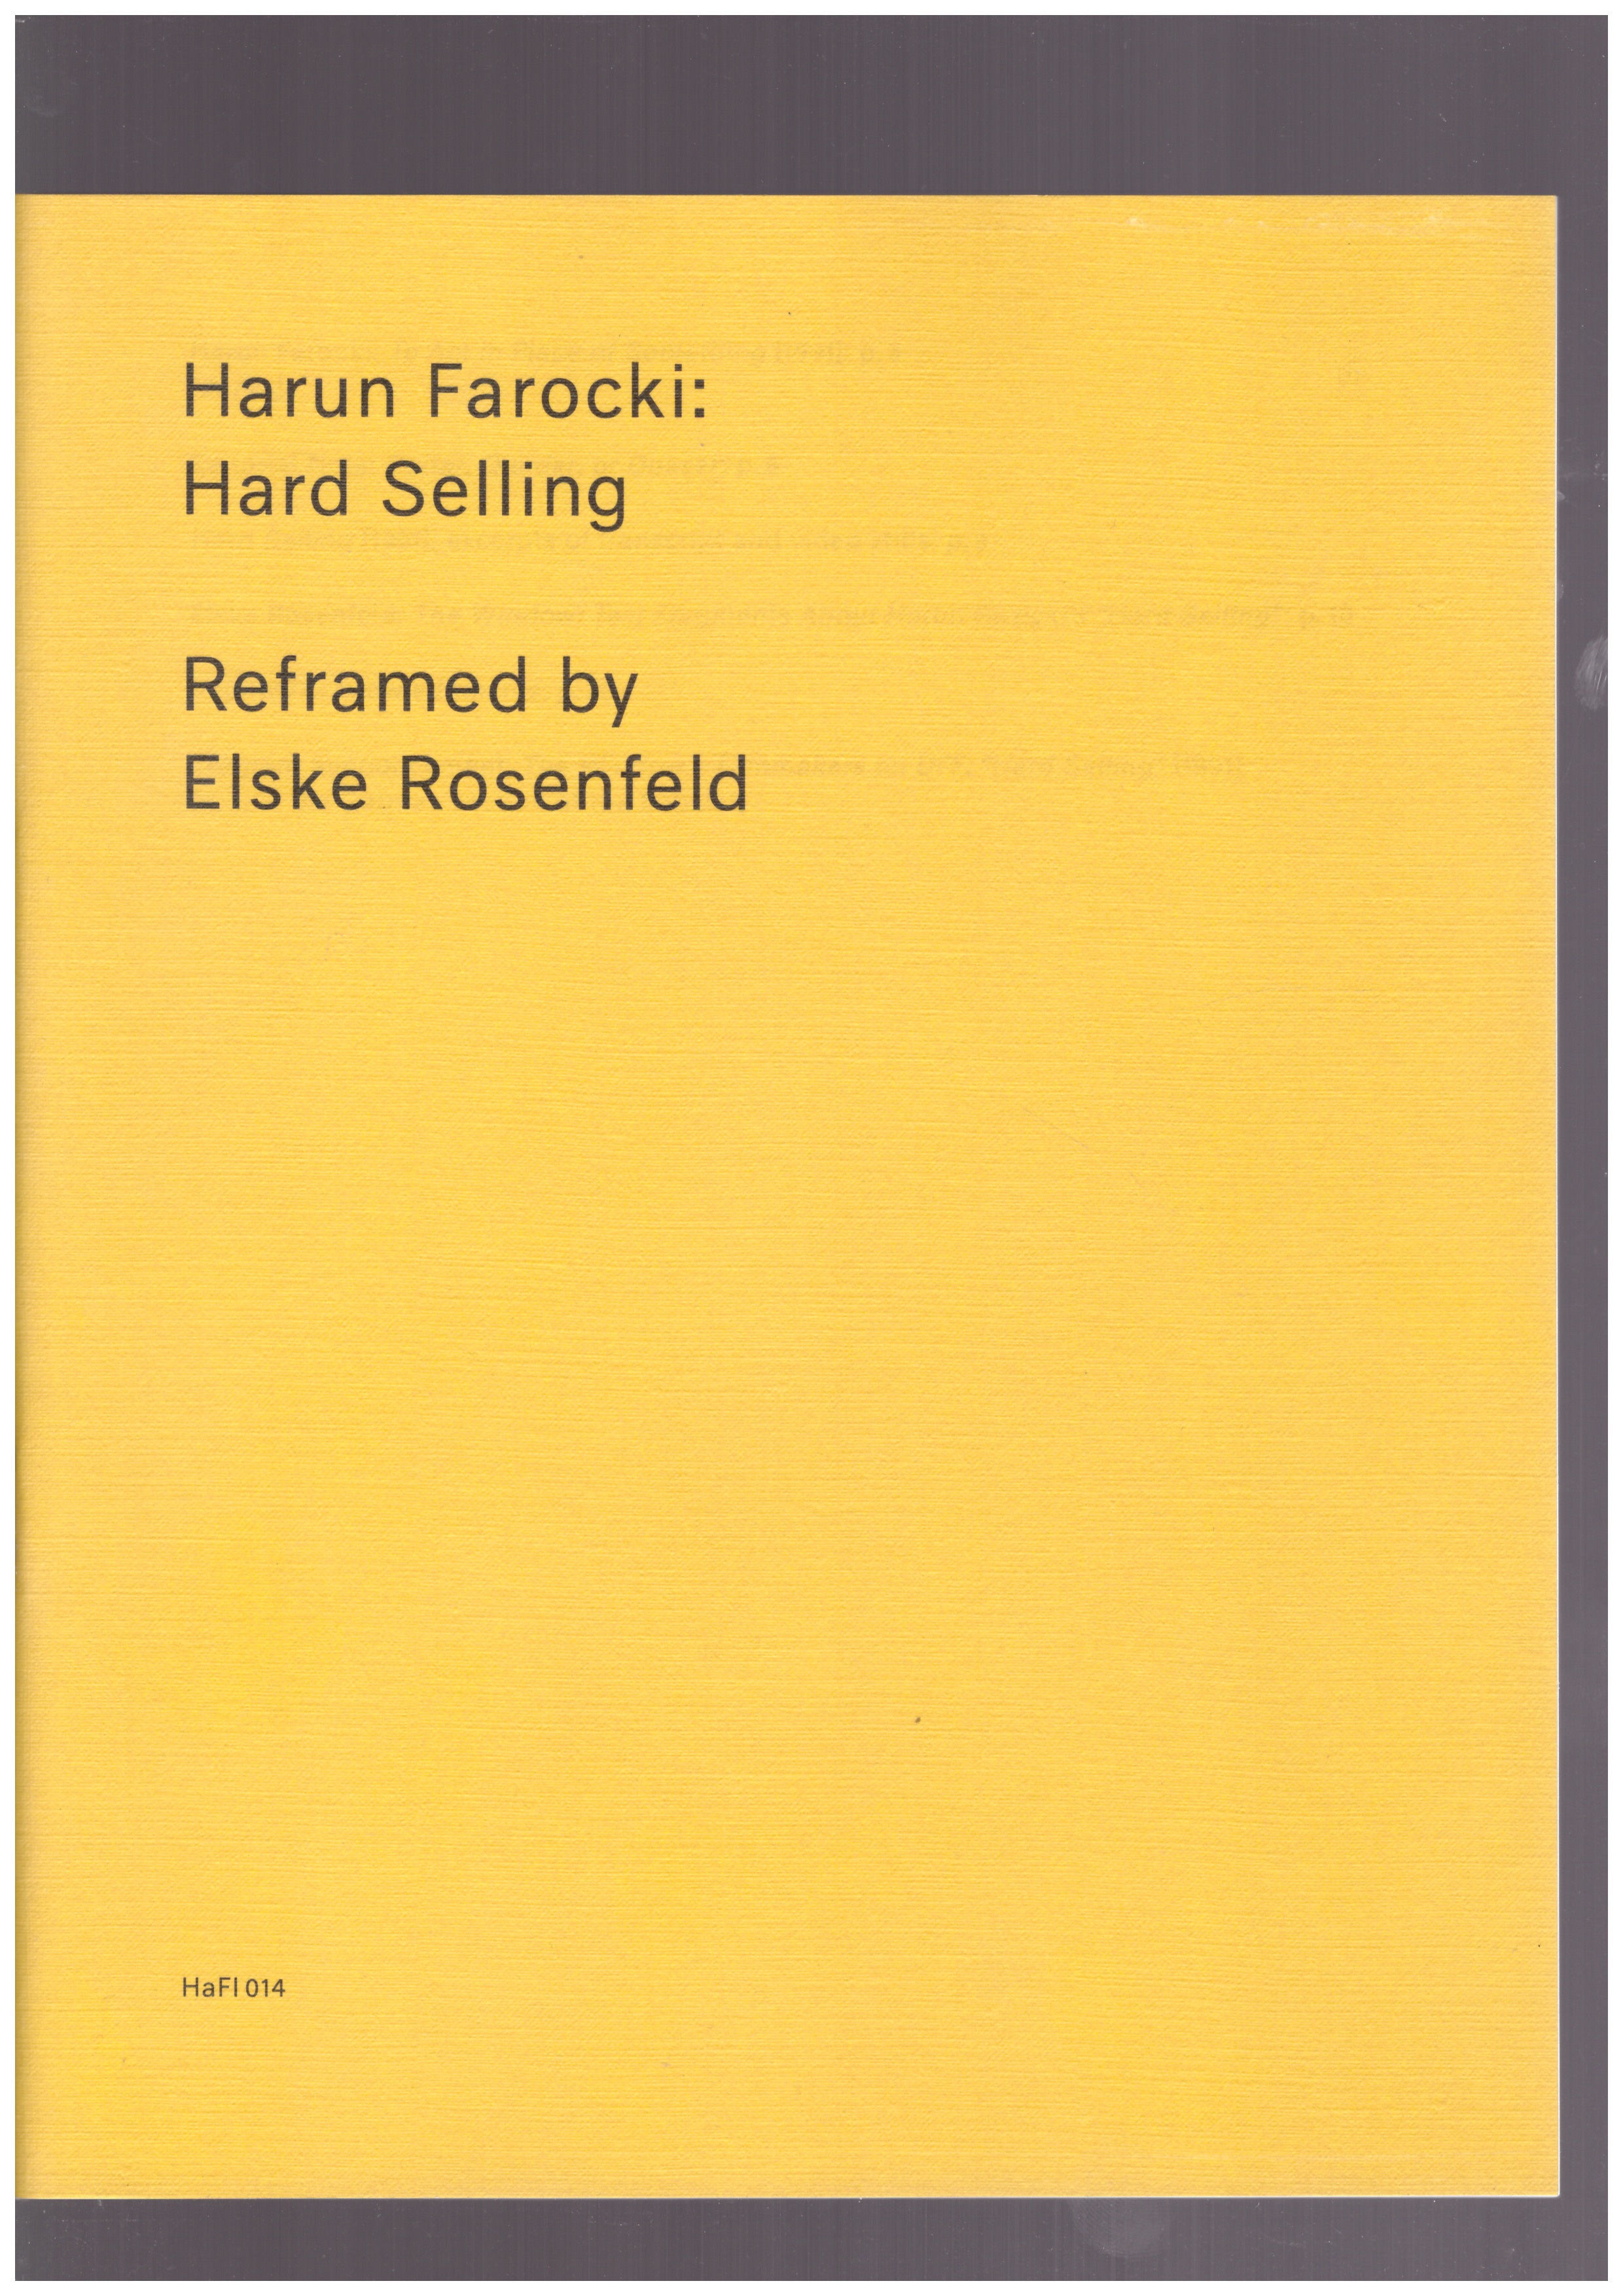 FAROCKI, Harun; ROSENFELD, Elske - Harun Farocki: Hard Selling, Reframed by Elske Rosenfeld